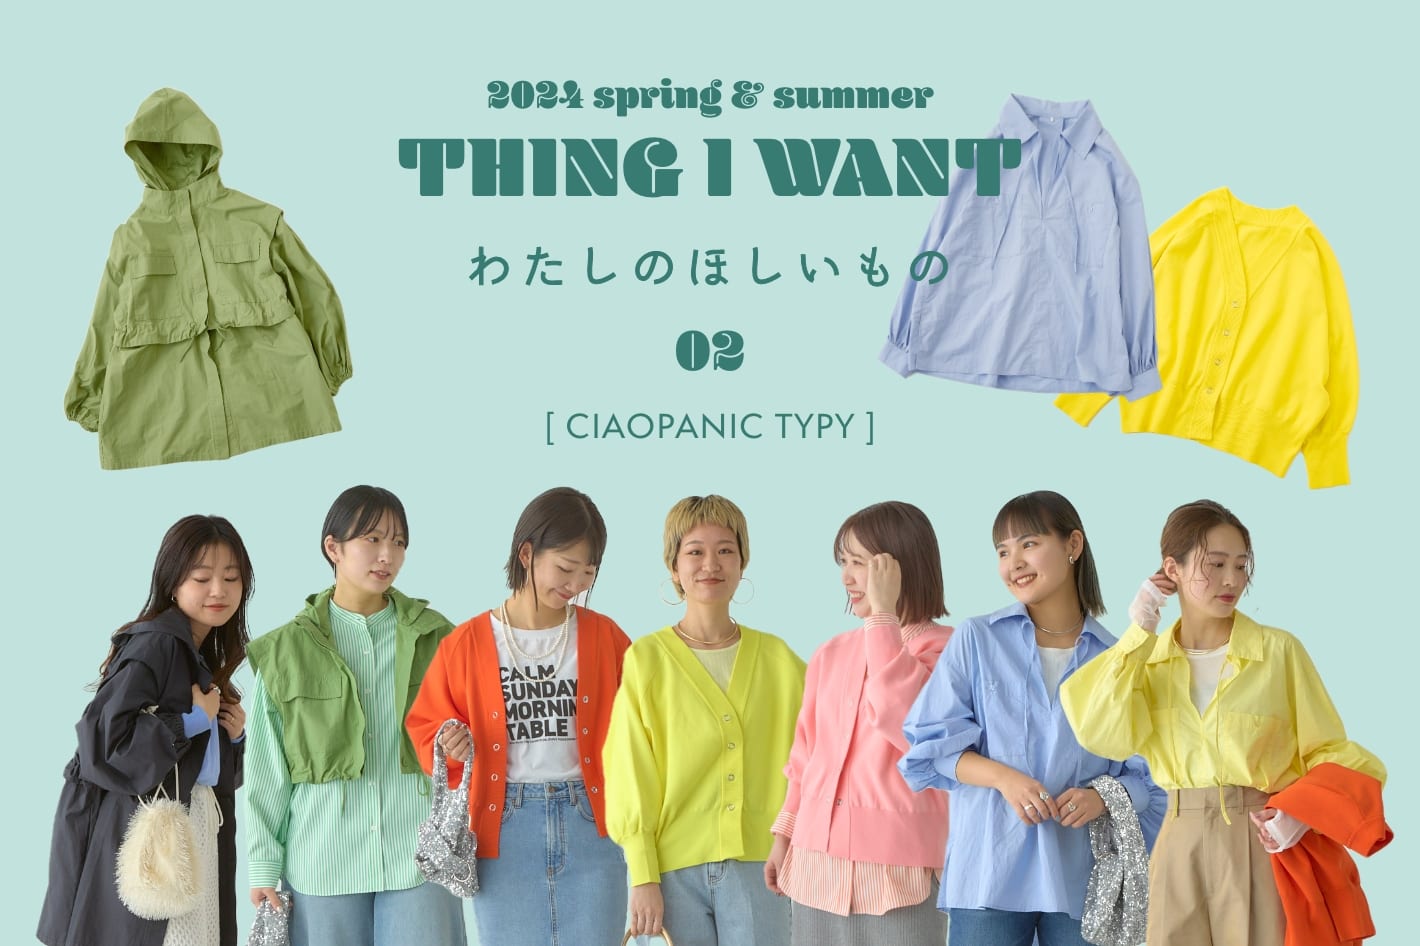 CIAOPANIC TYPY 2024 spring & summer 【 THING I WANT わたしのほしいもの 】 02